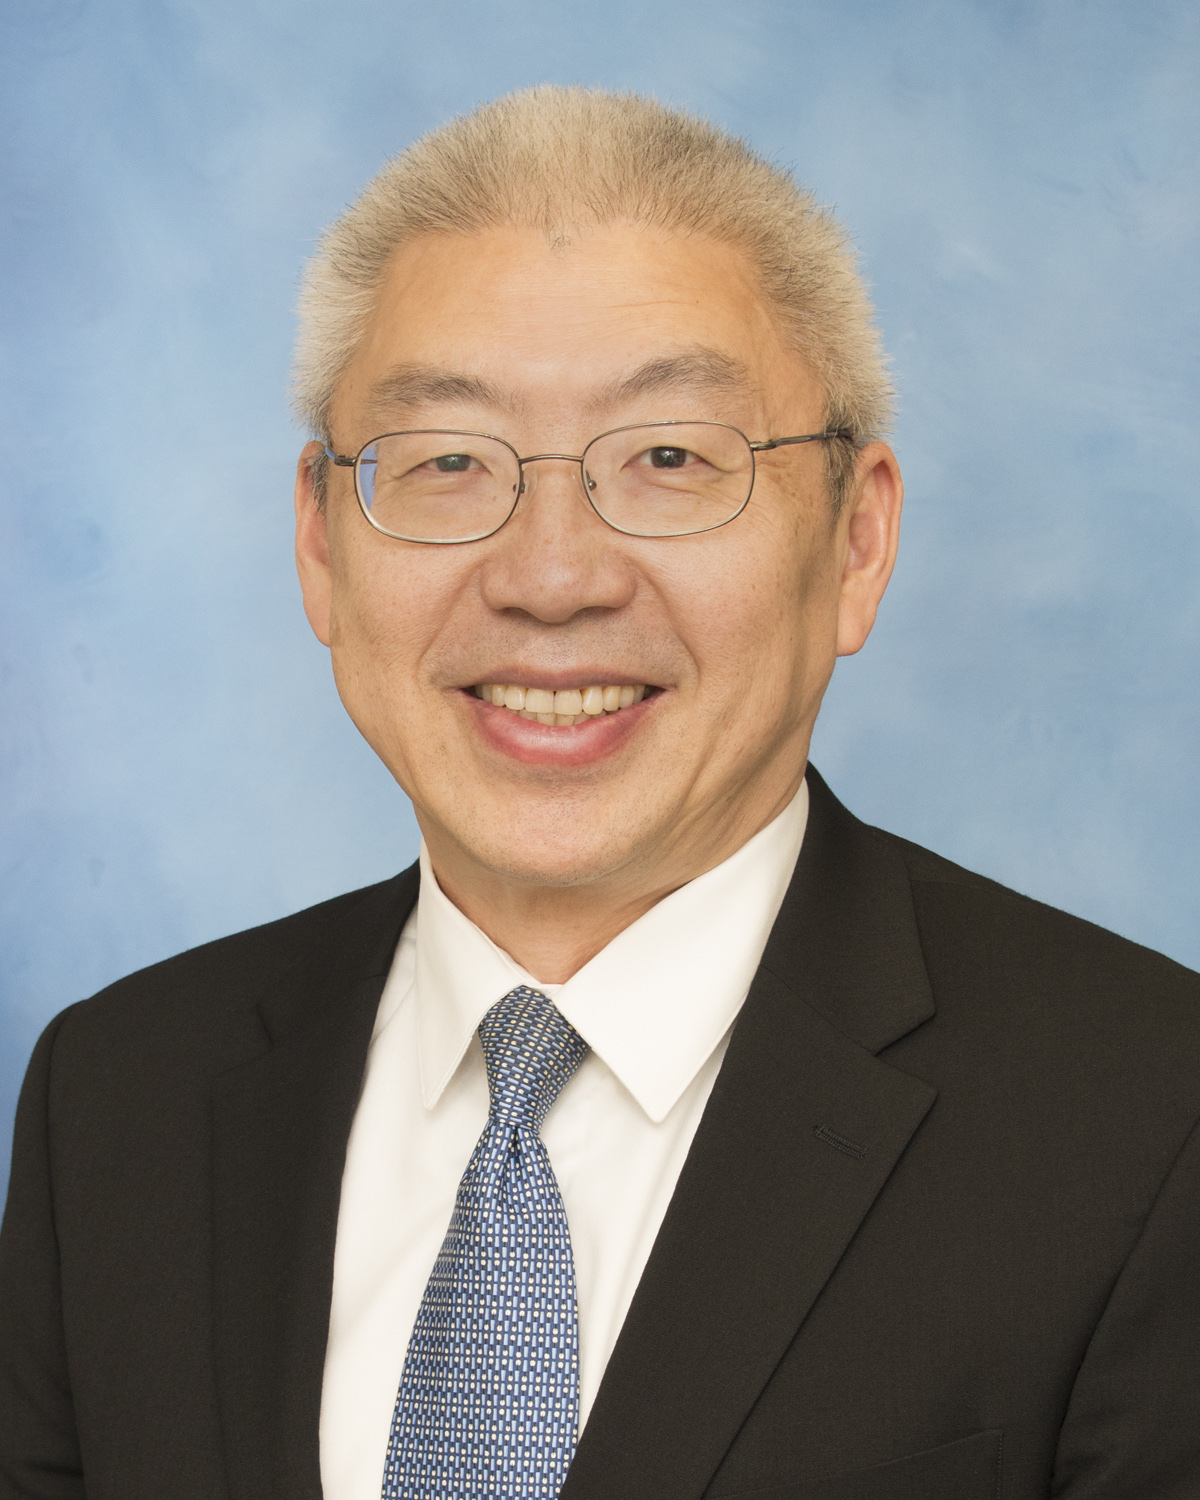 Kevin C. Chung